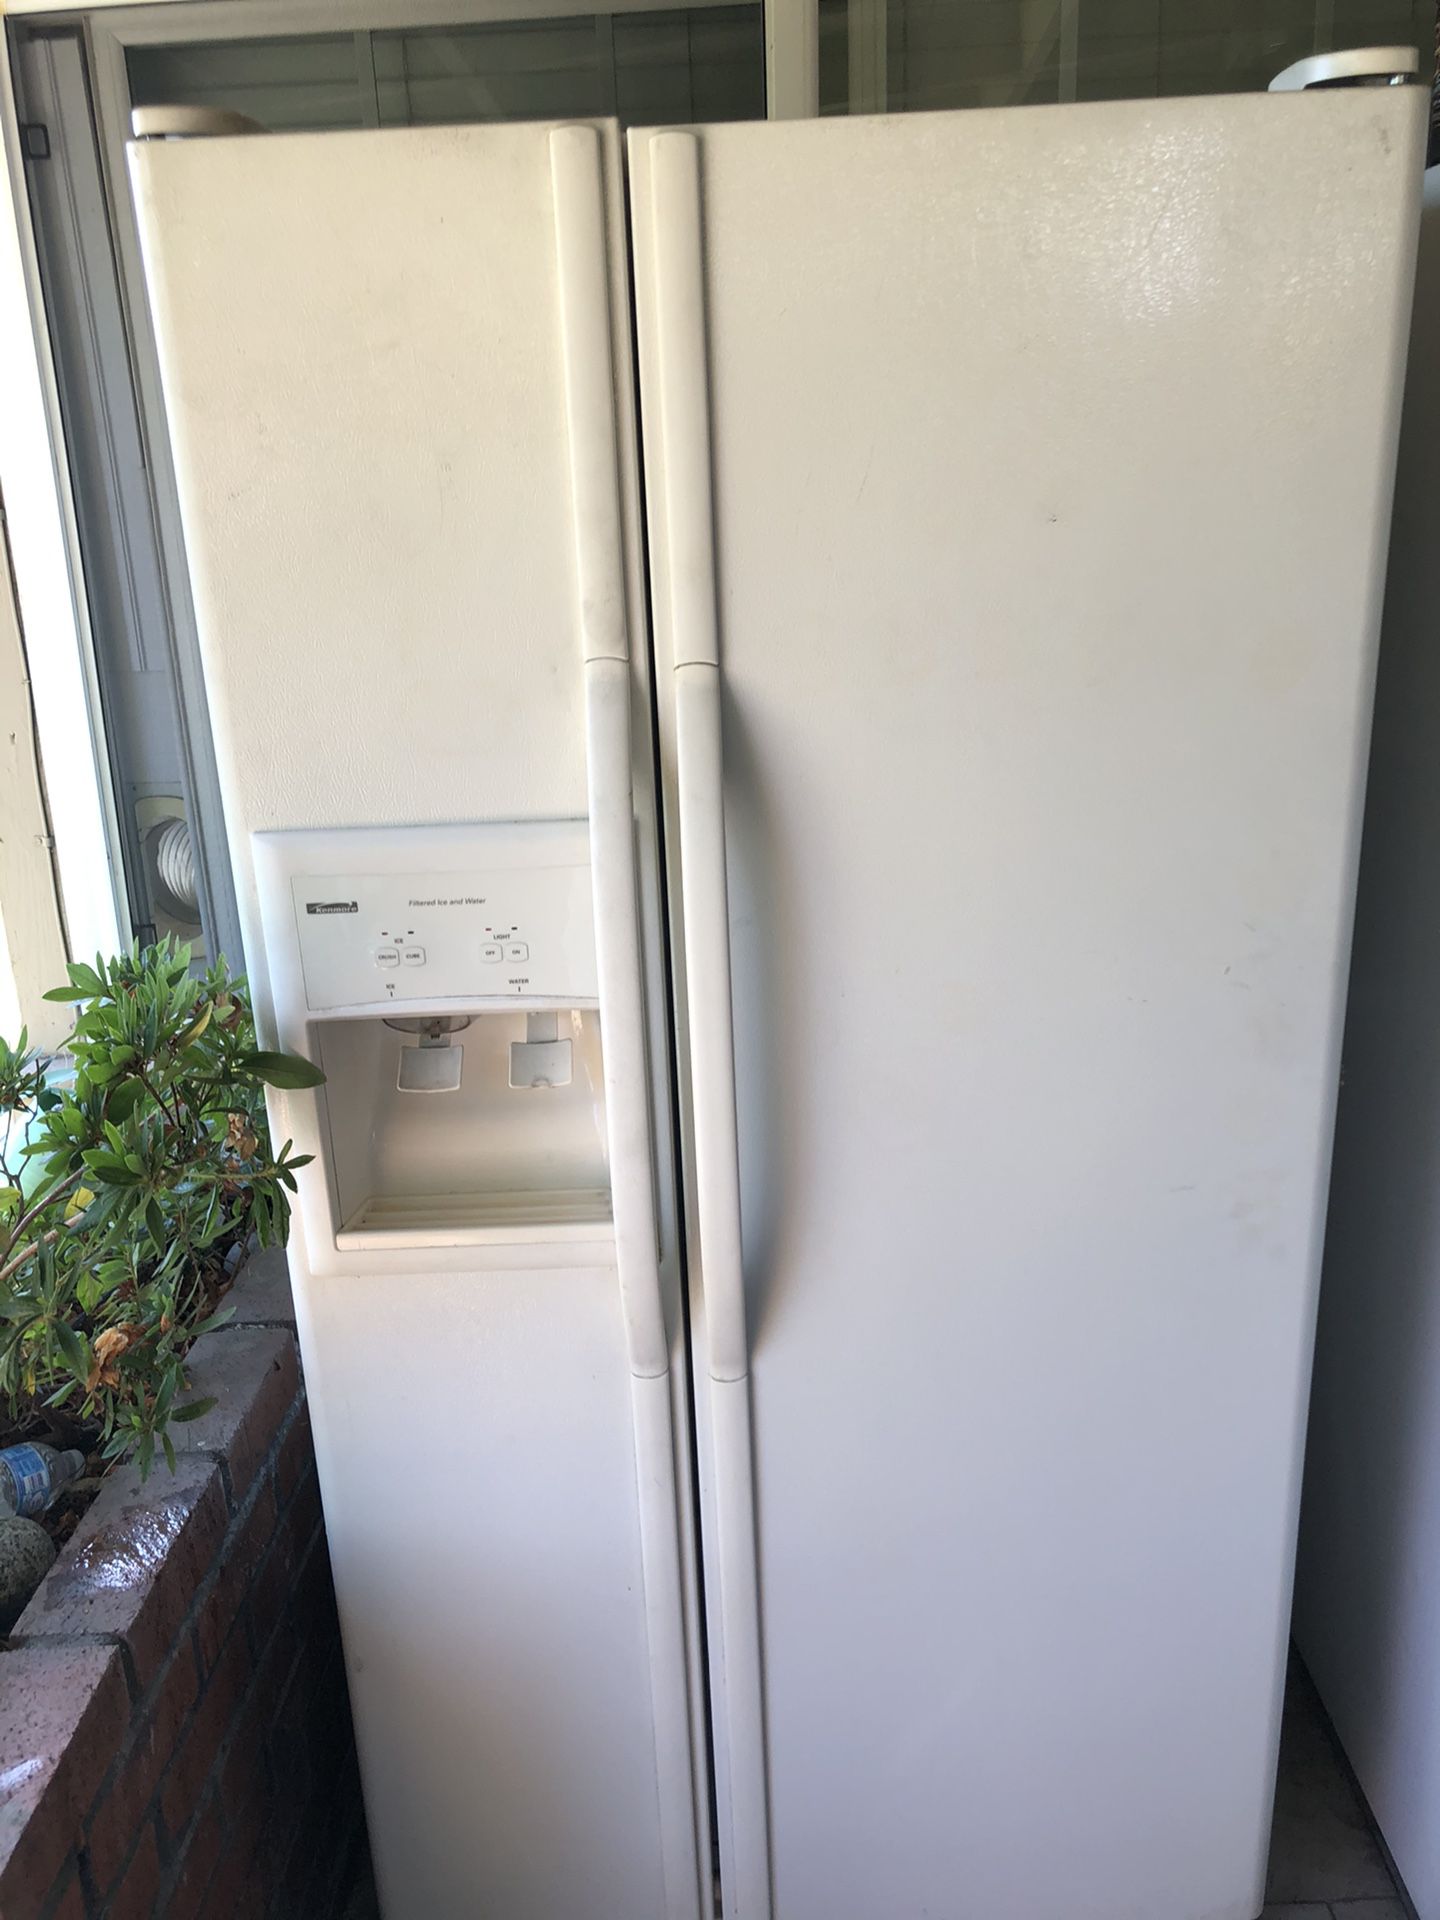 Refrigerator, side by side